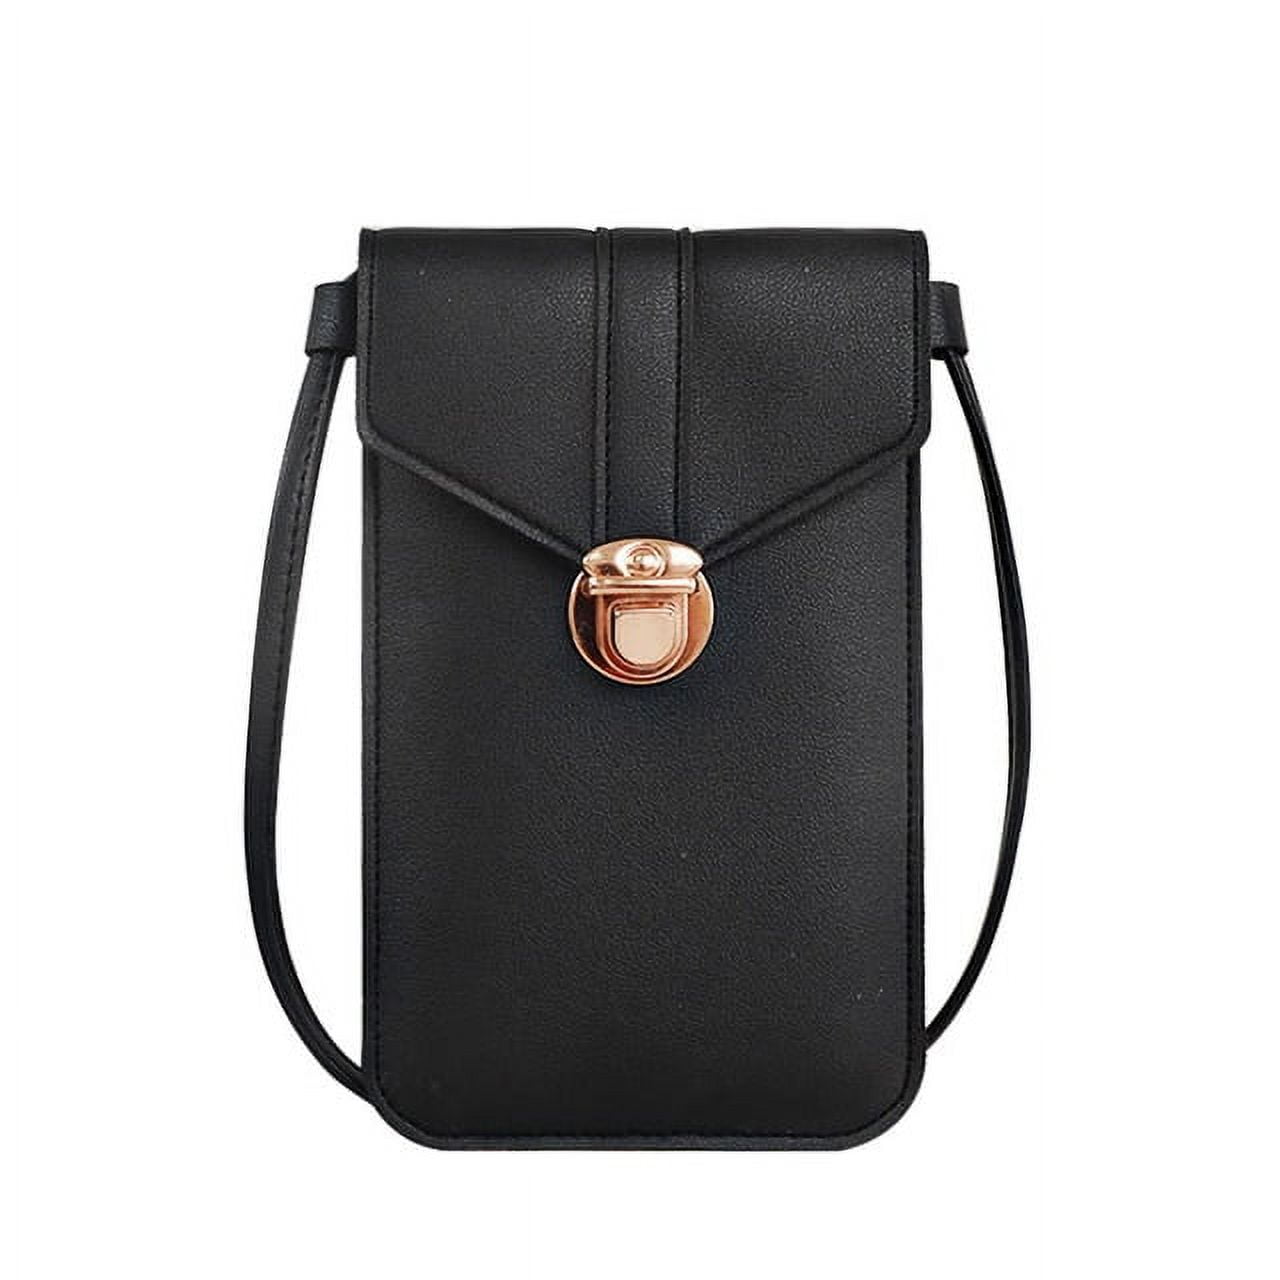 1pc Black Pu Leather Shoulder Crossbody Bag Strap, Fashionable Minimalist  Bag Accessory, Suitable For Women To Replace Long Bag Shoulder Strap